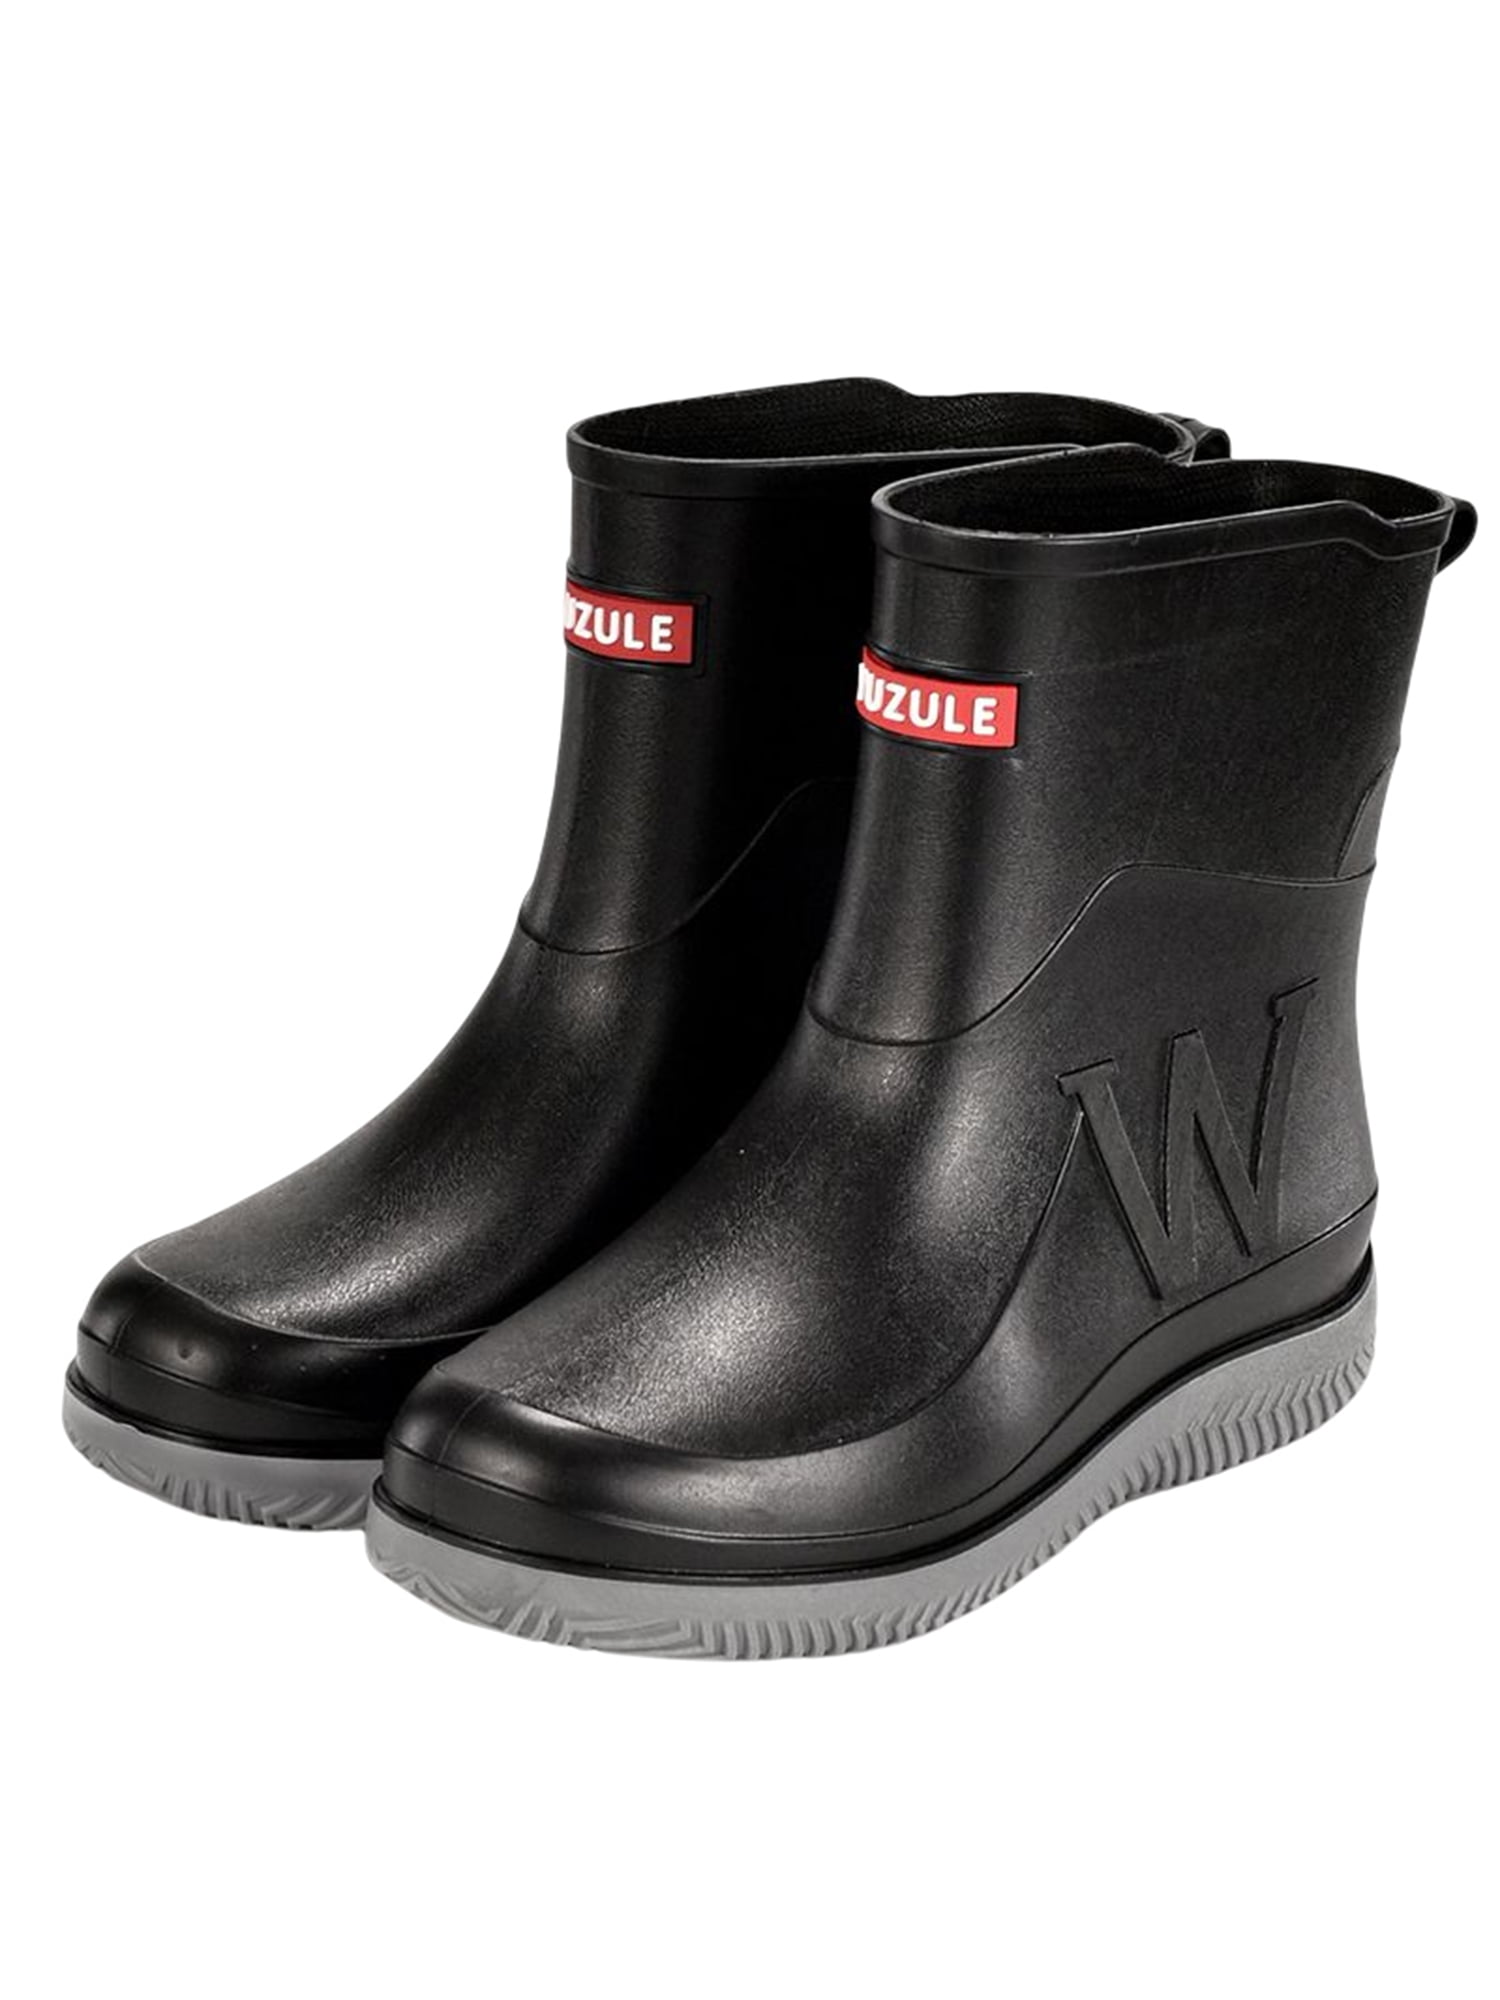 Woobling Mens Garden Shoes Waterproof Rain Boots Mid Calf Rubber Boot ...